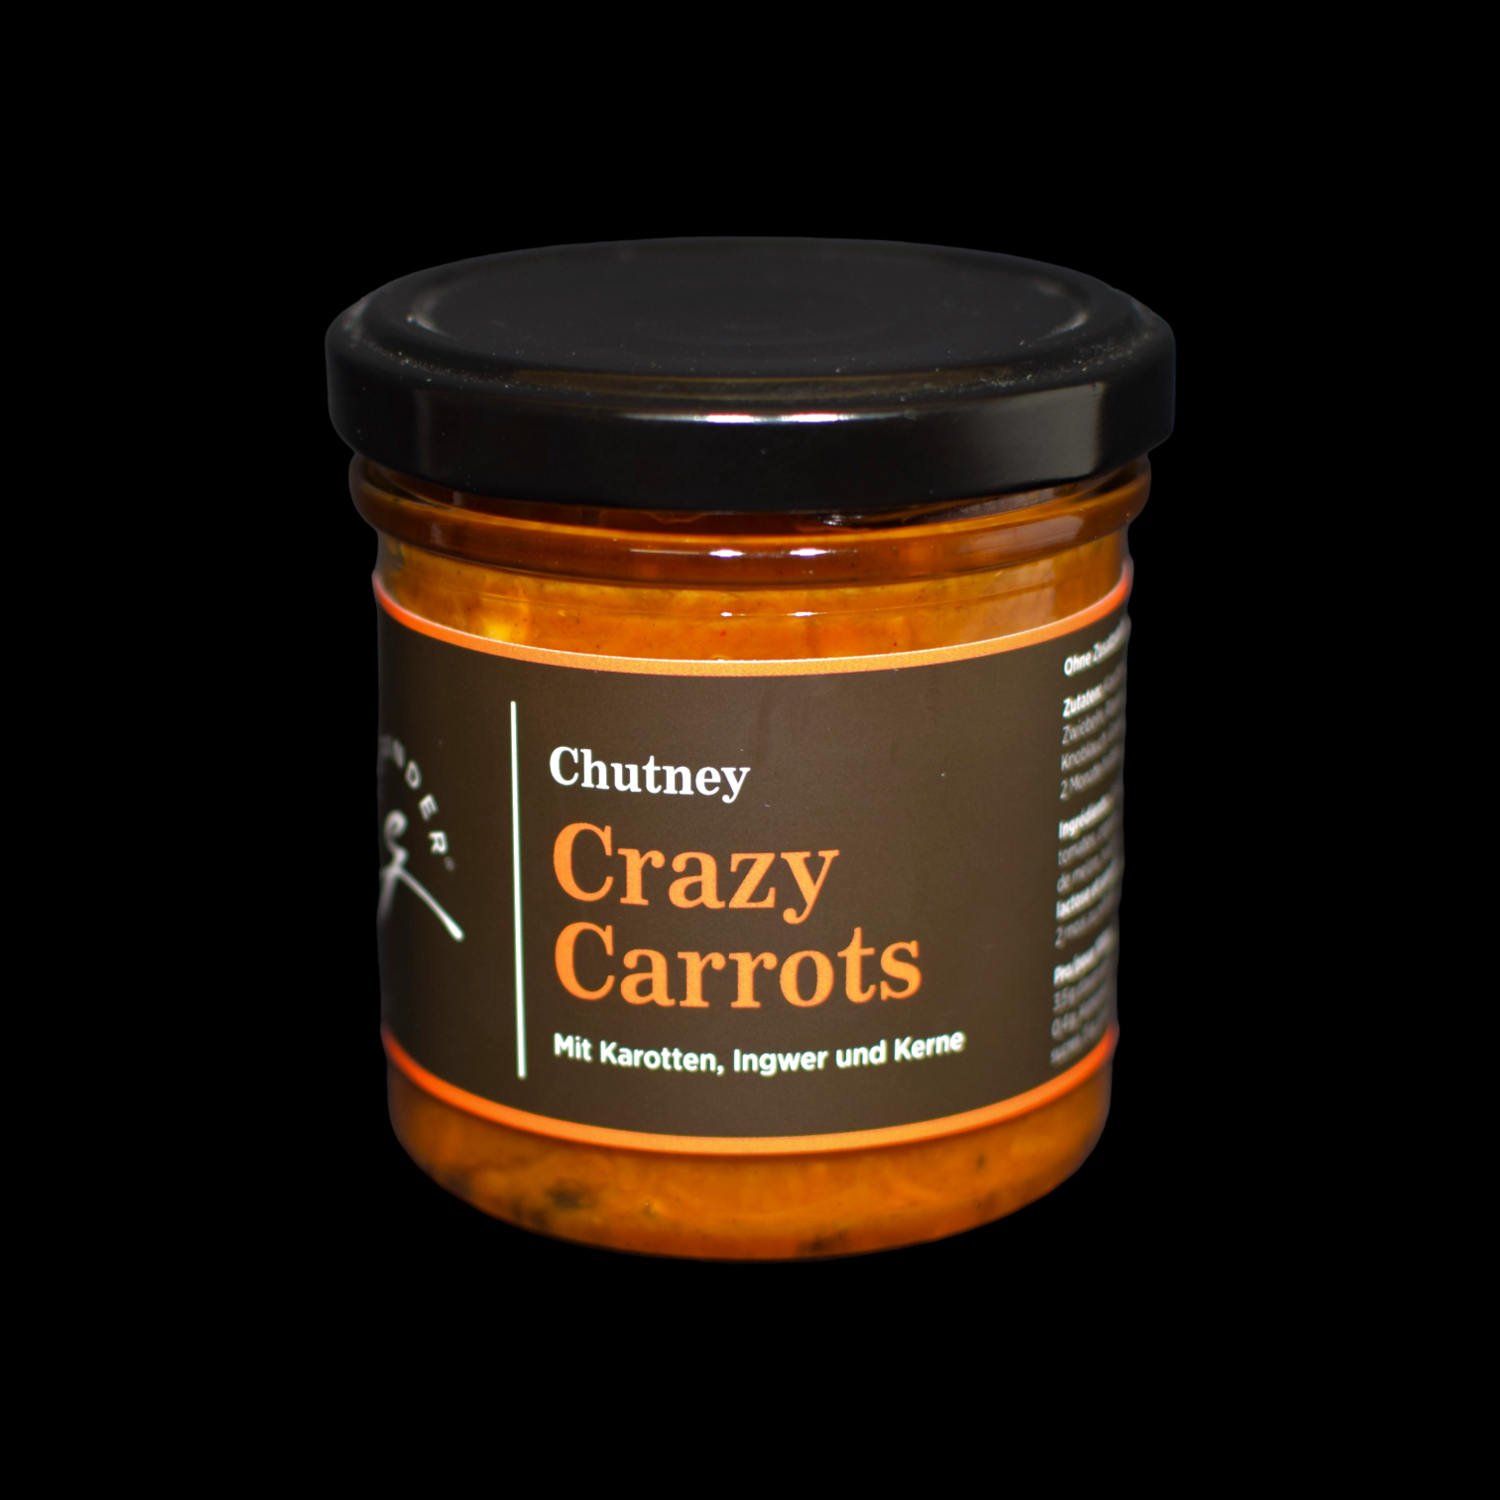 Chutney Crazy Carrots